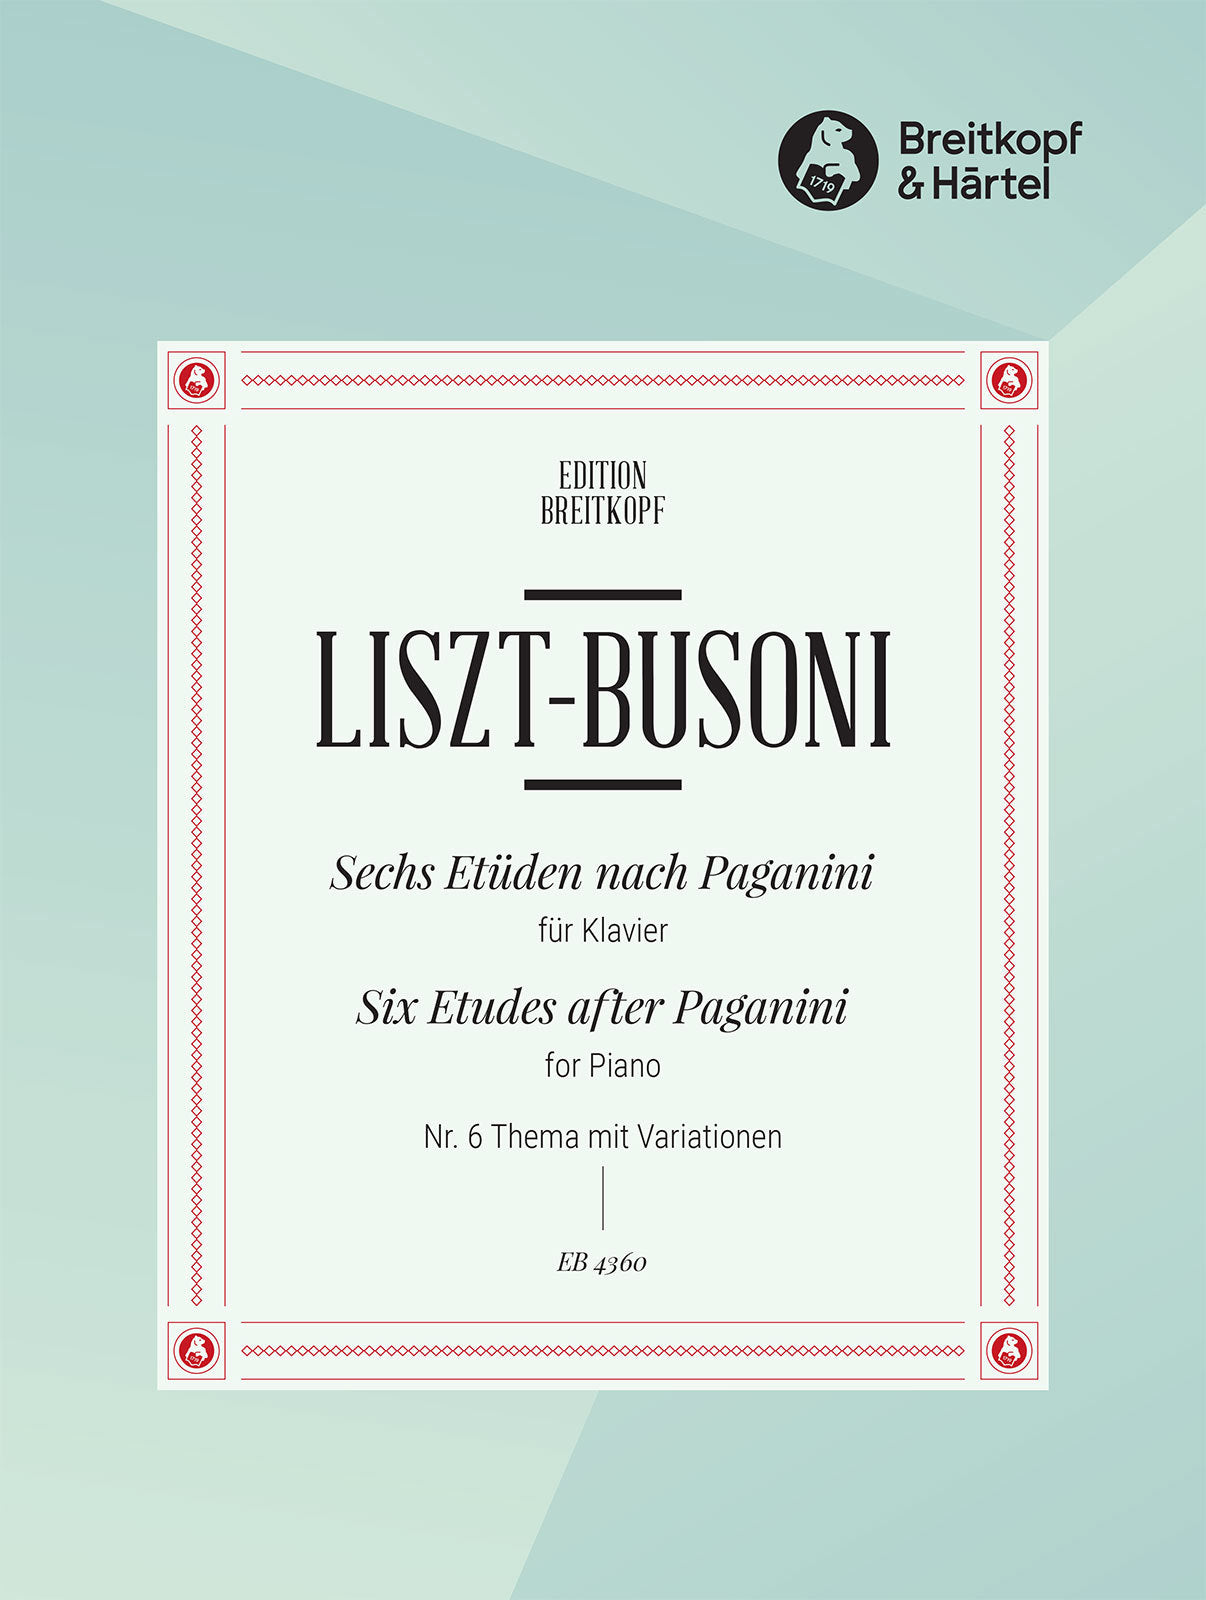 Liszt-Busoni: Etude No. 6 after Paganini - "Theme and Variations"